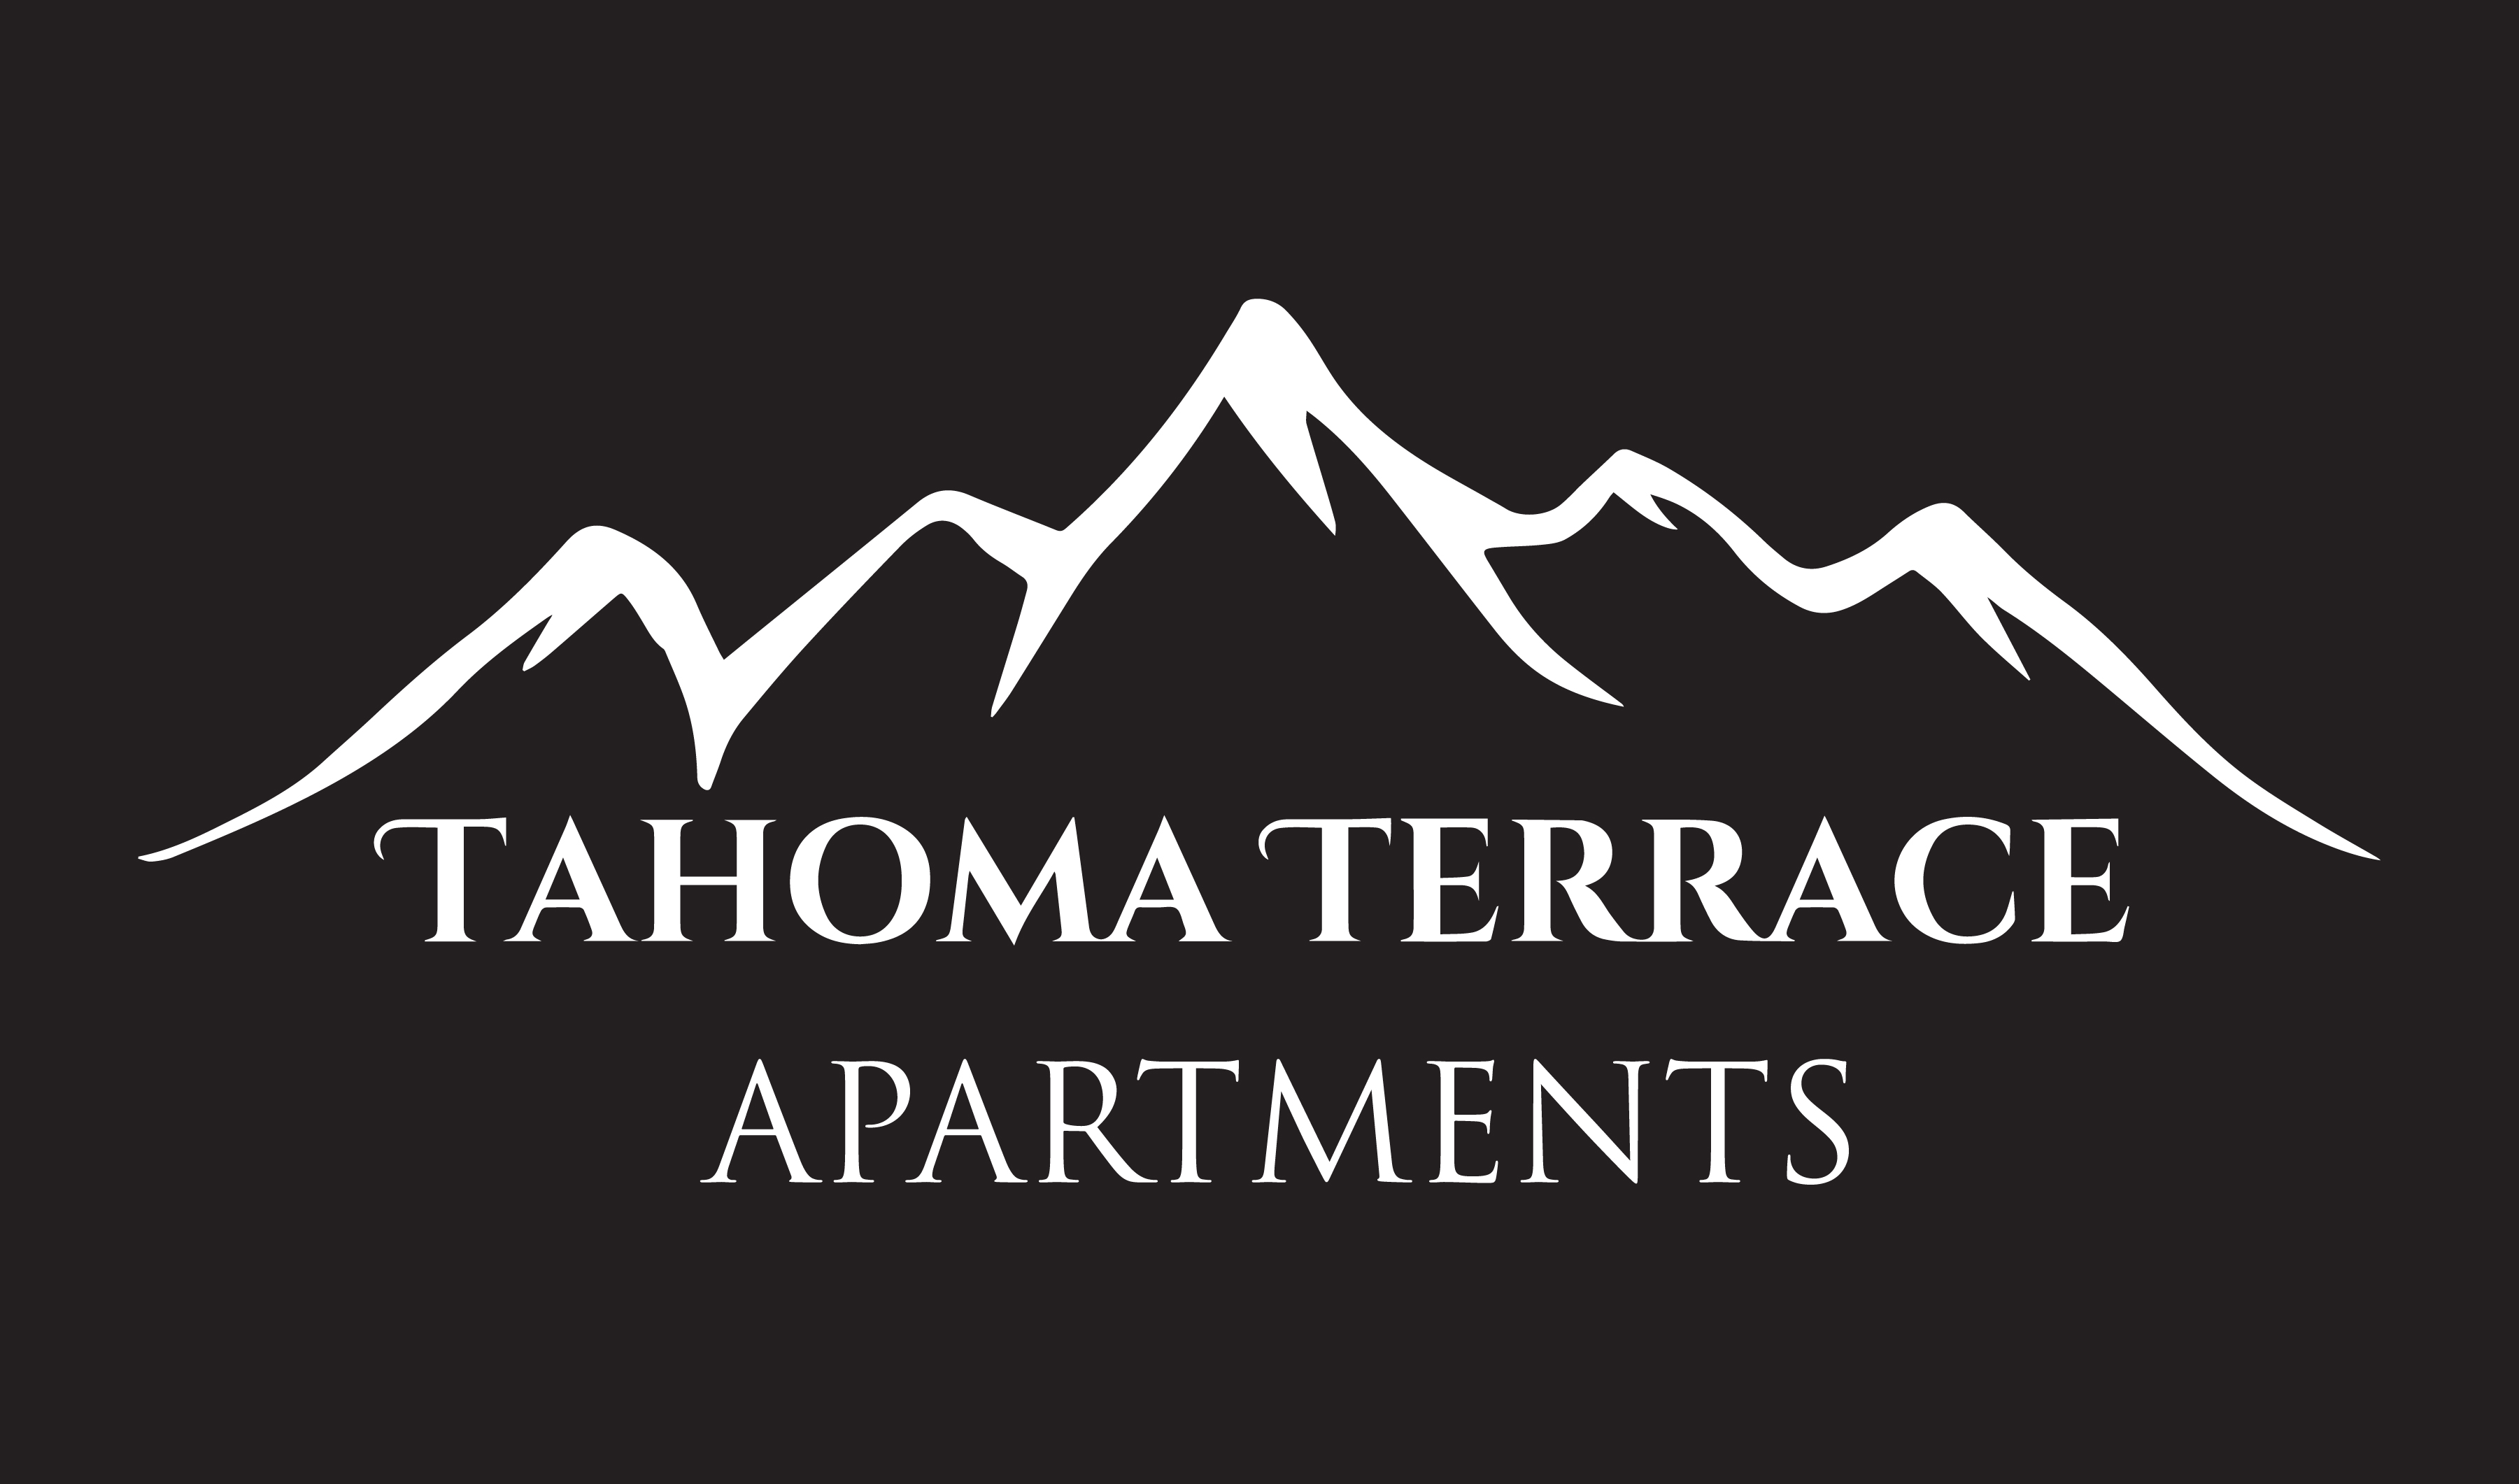 Tahoma Terrace Apartments